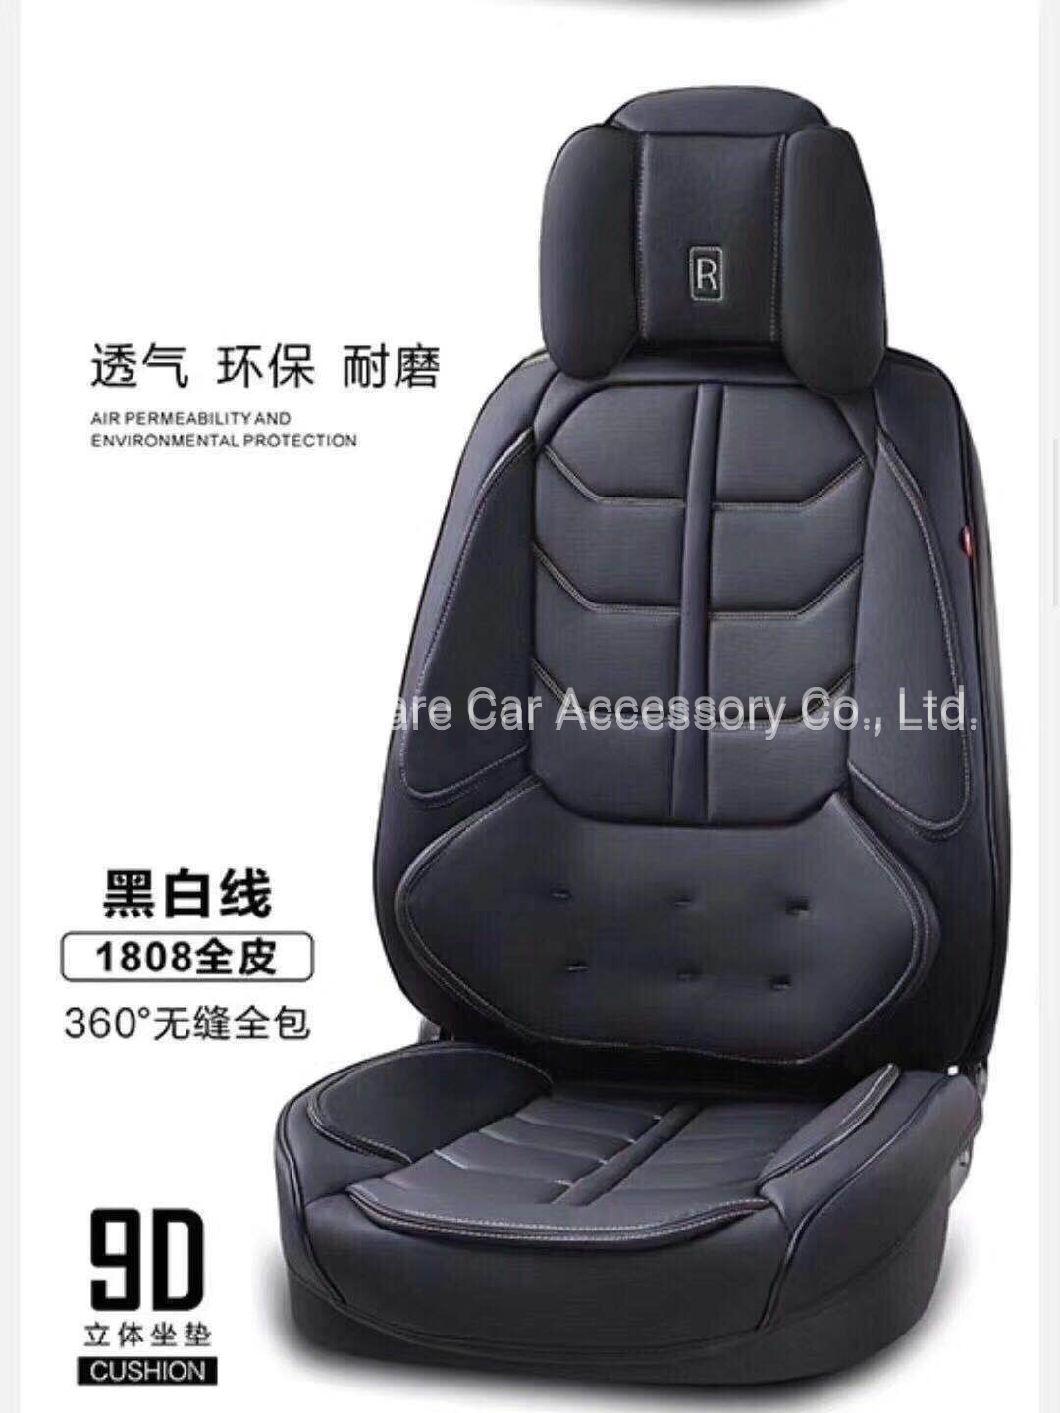 Car Accessory Hottest Fashion Car Decoration Auto Spare Part Car Seat Cover Car Accessory